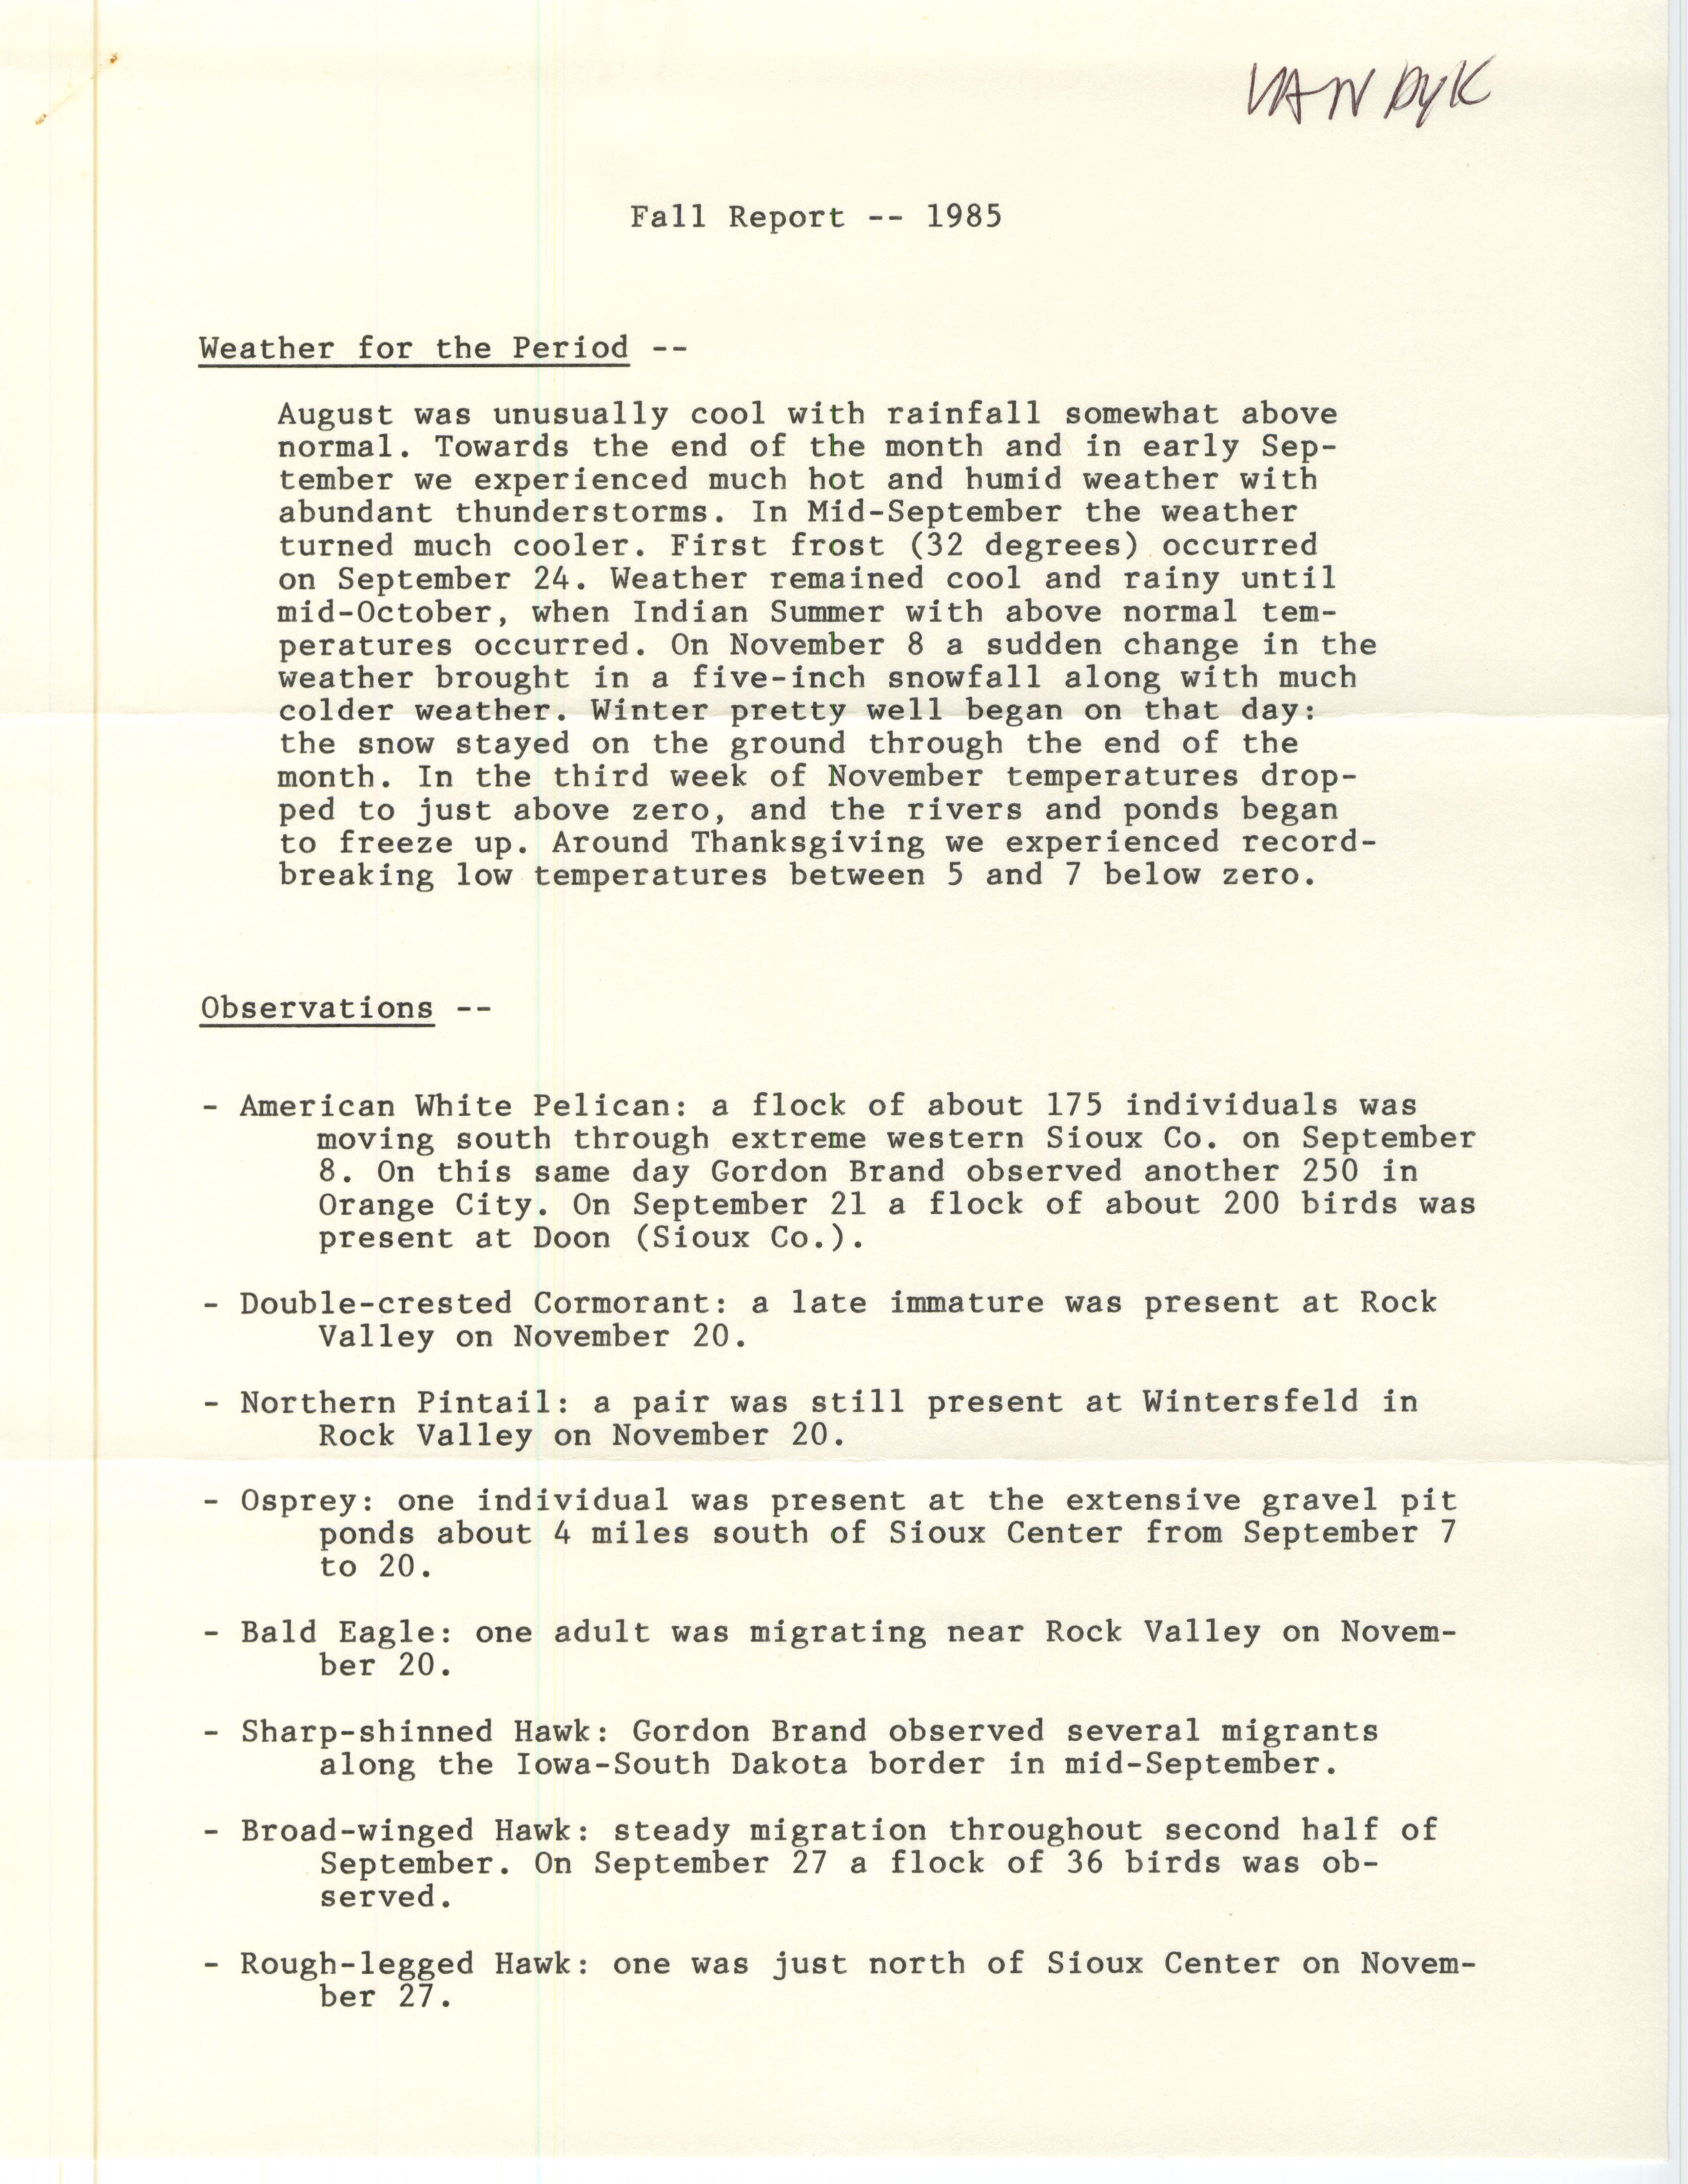 Fall report, 1985